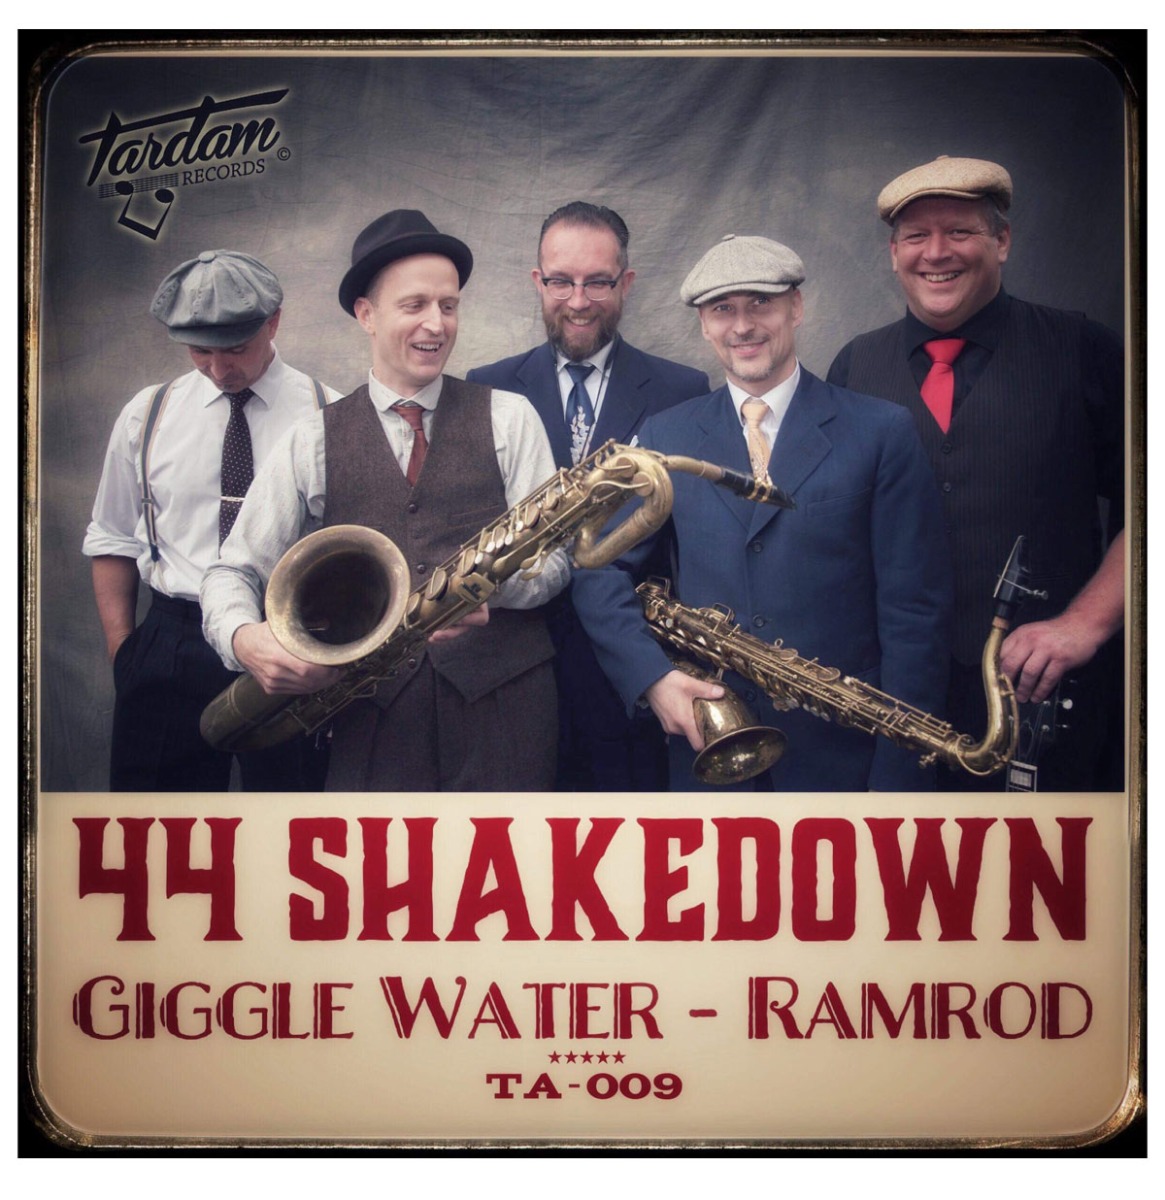 44 Shakedown - Giggle Water / Ramrod 7" Vinyl